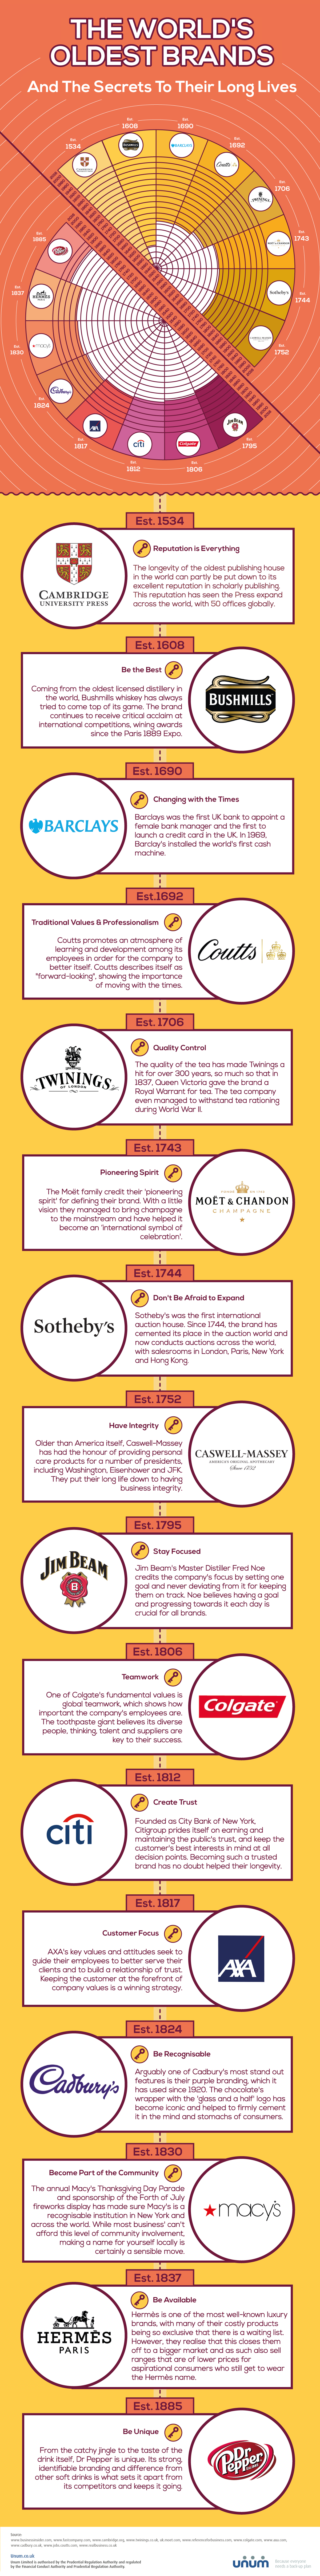 oldest-brands-infographic